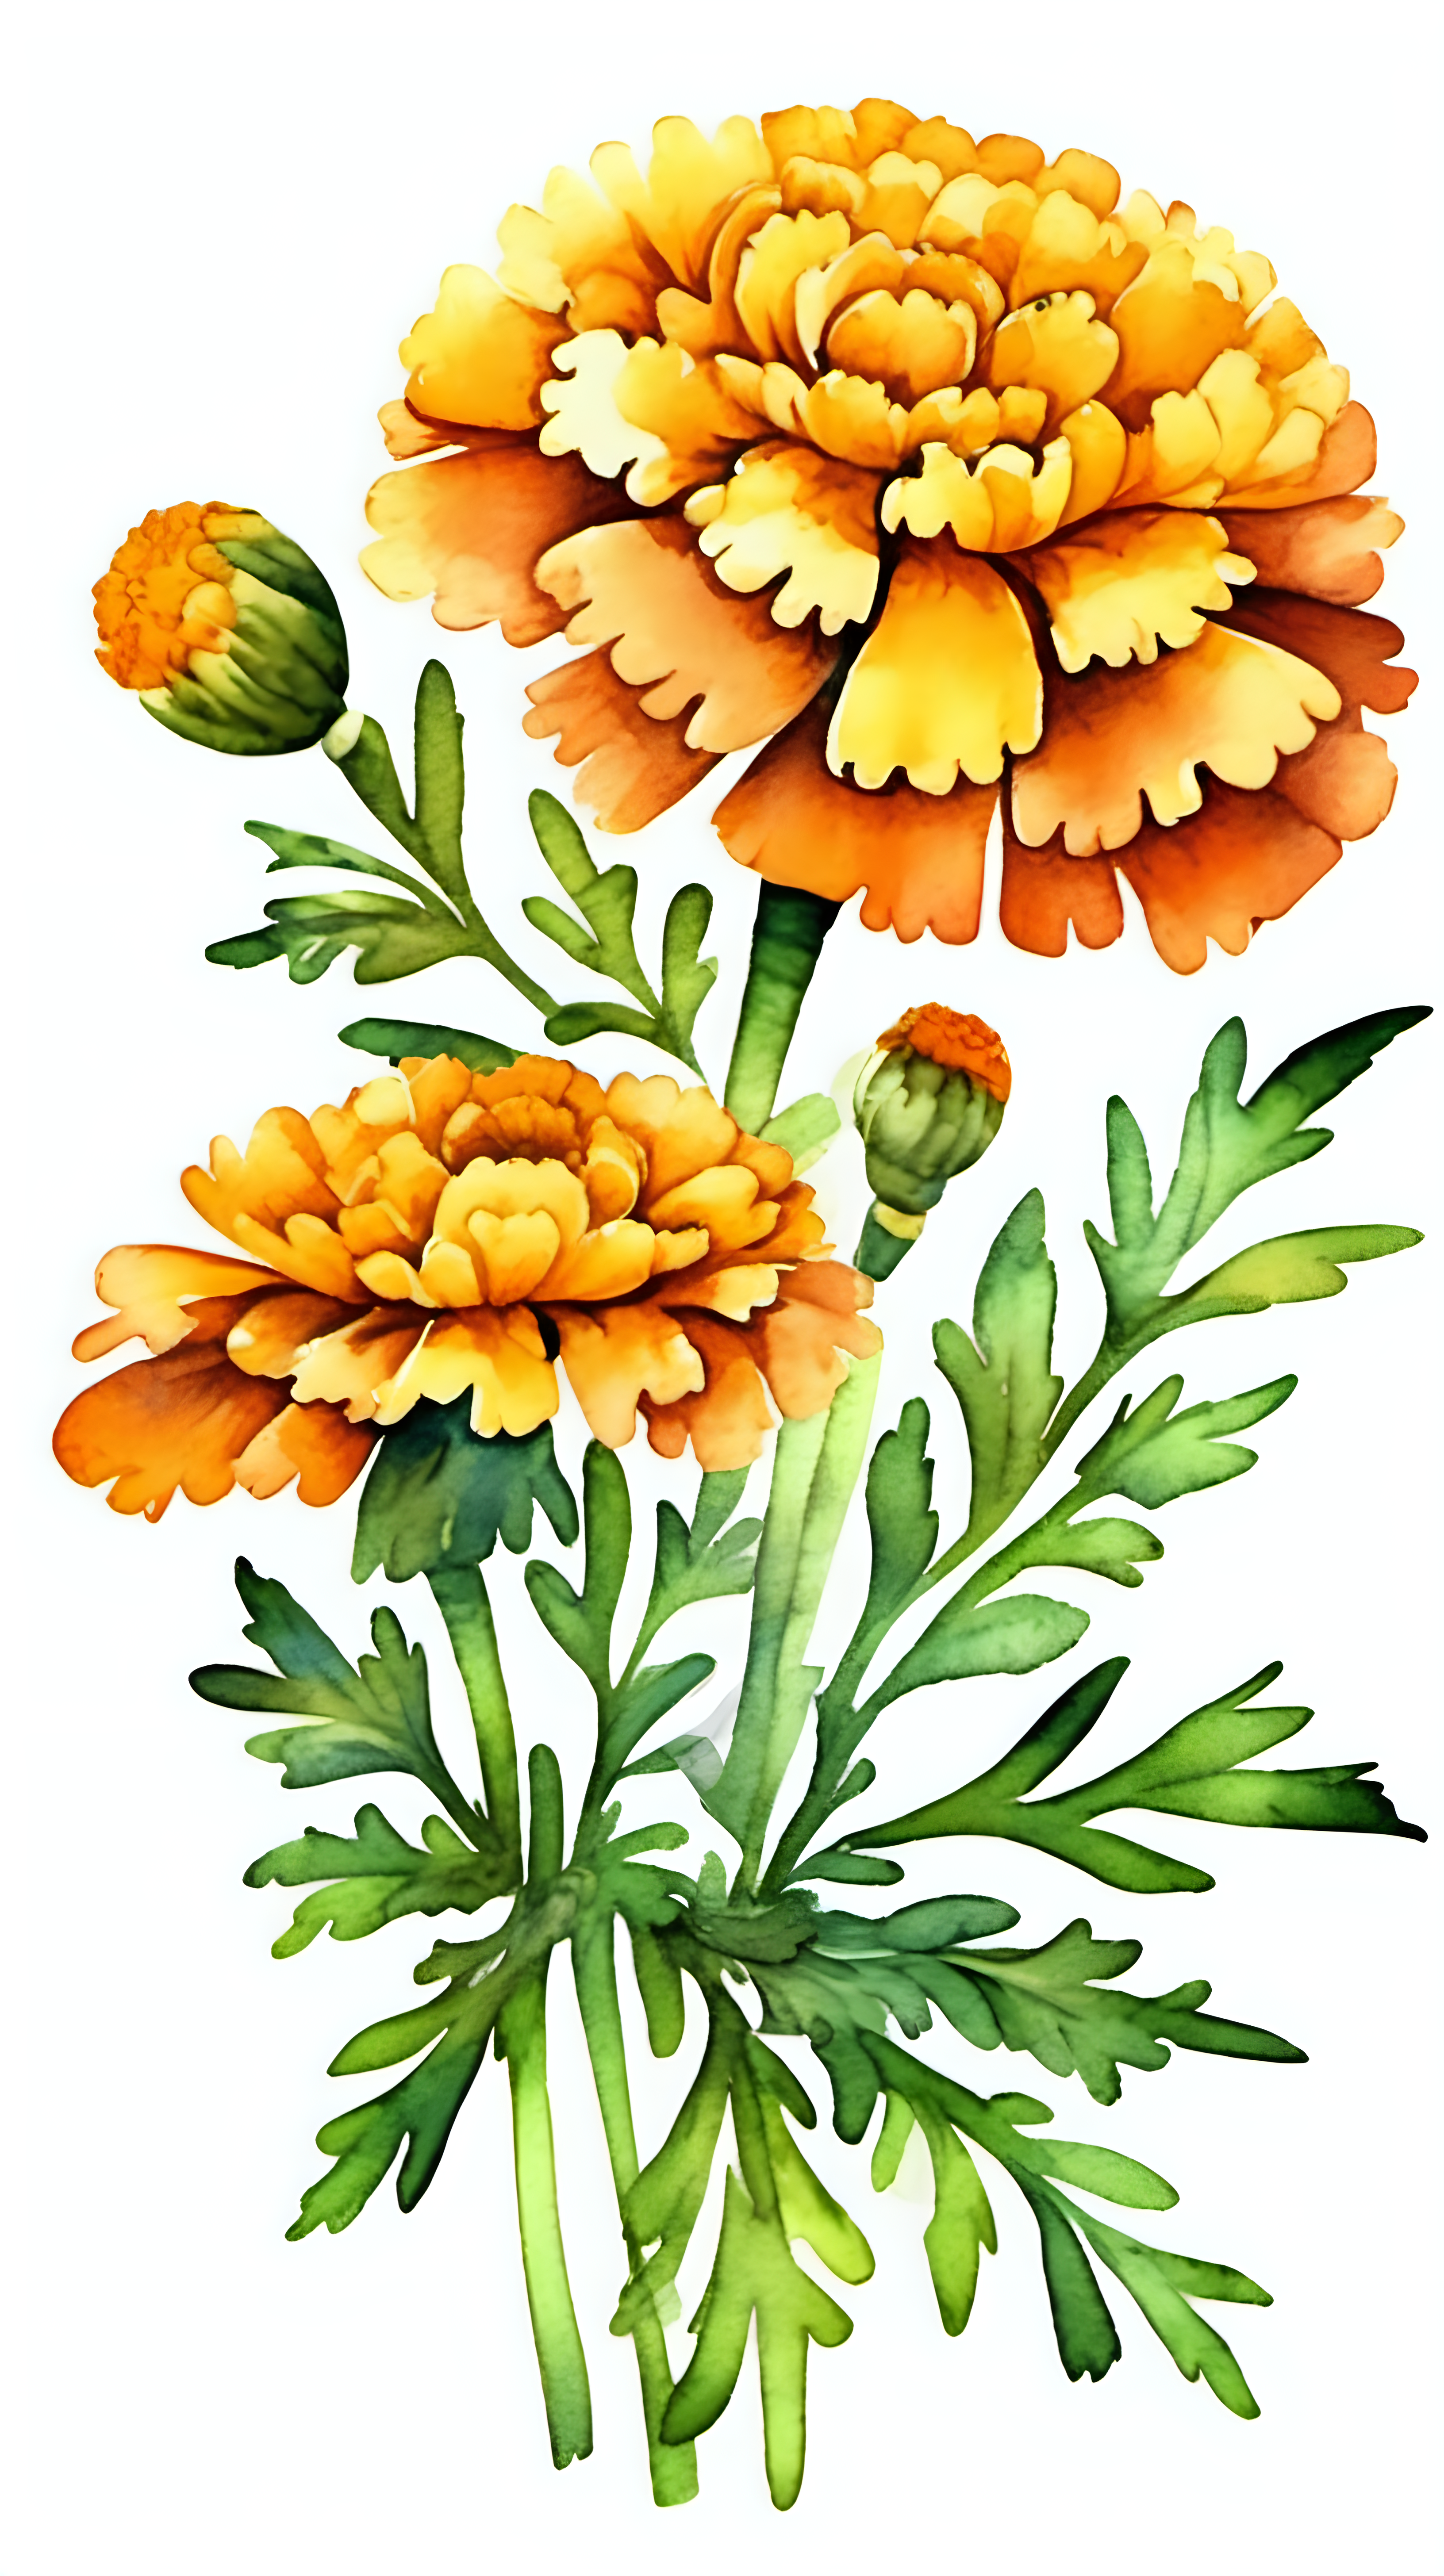 one Marigold, folk art style, festive mood, bright lighting, watercolor 
colorful clip art illustration, high detail, white background